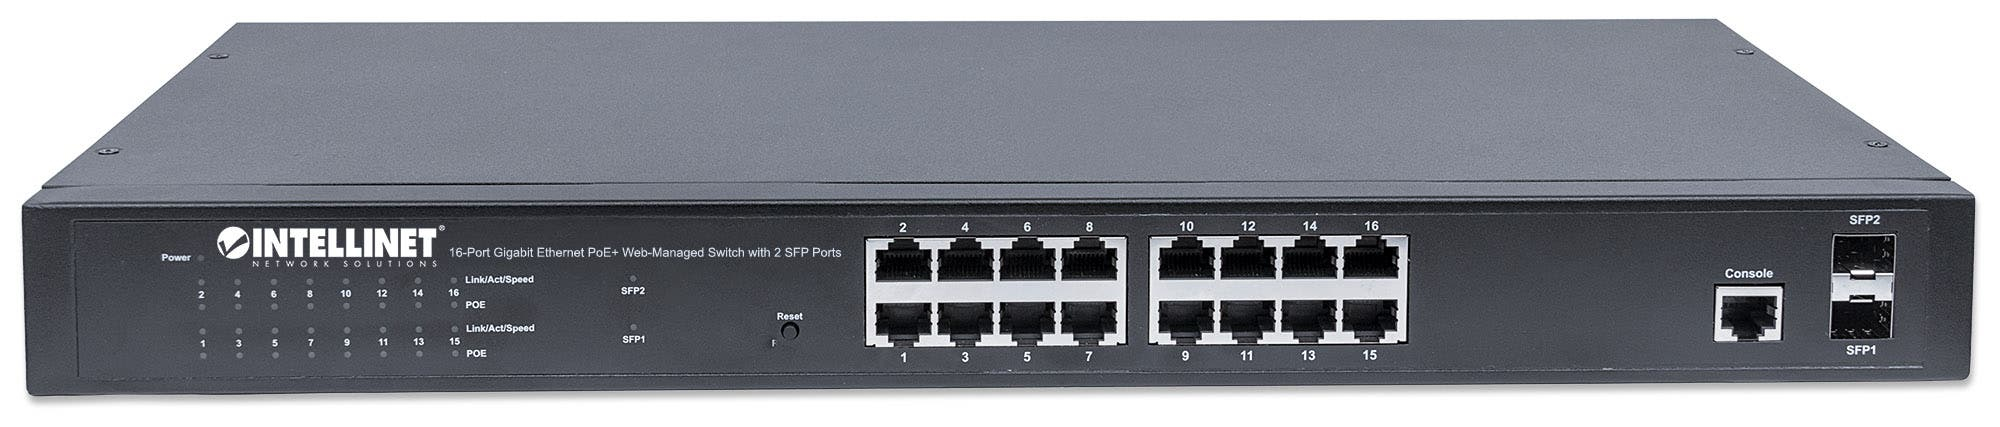 Intellinet 16-Port Gigabit Ethernet PoE+ Web-Managed Switch with 2 SFP Ports, IEEE 802.3at/af Power over Ethernet (PoE+/PoE) Compliant, 374 W, Endspan, 19" Rackmount (UK 3-pin plug)